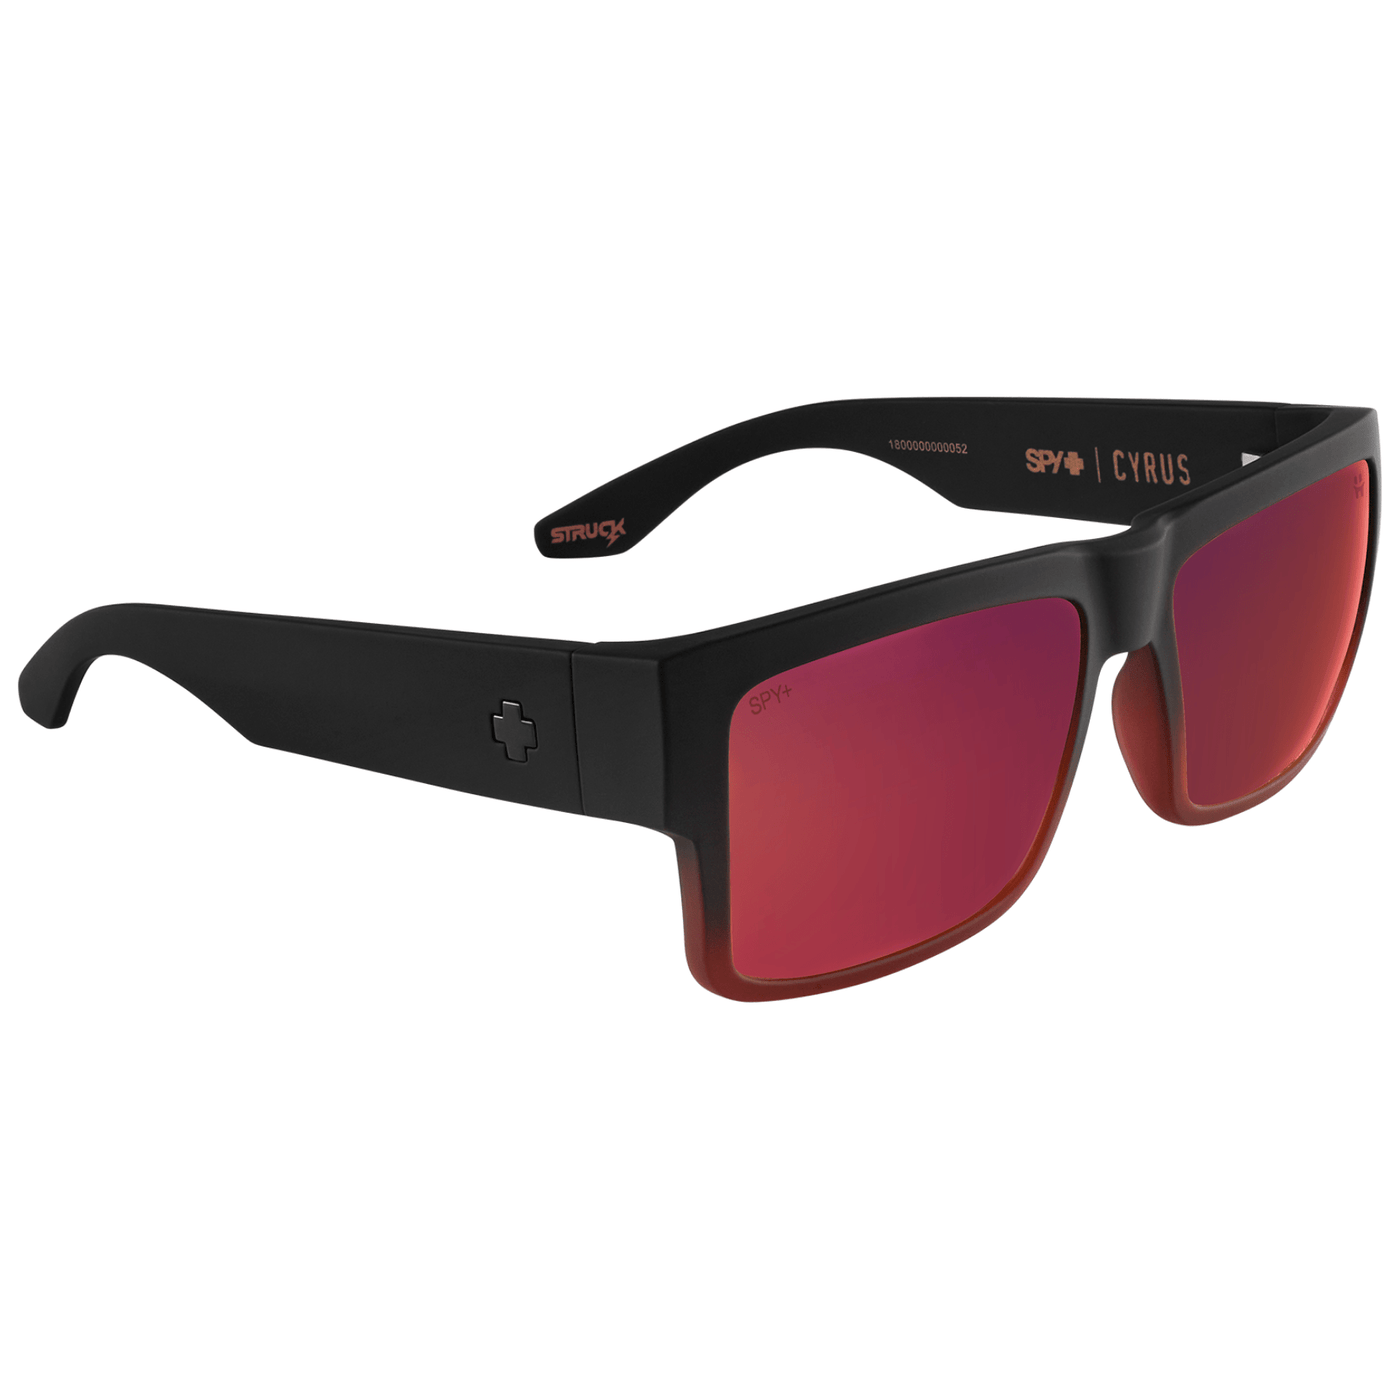 spy optic cyrus happy lens sunglasses - red plum